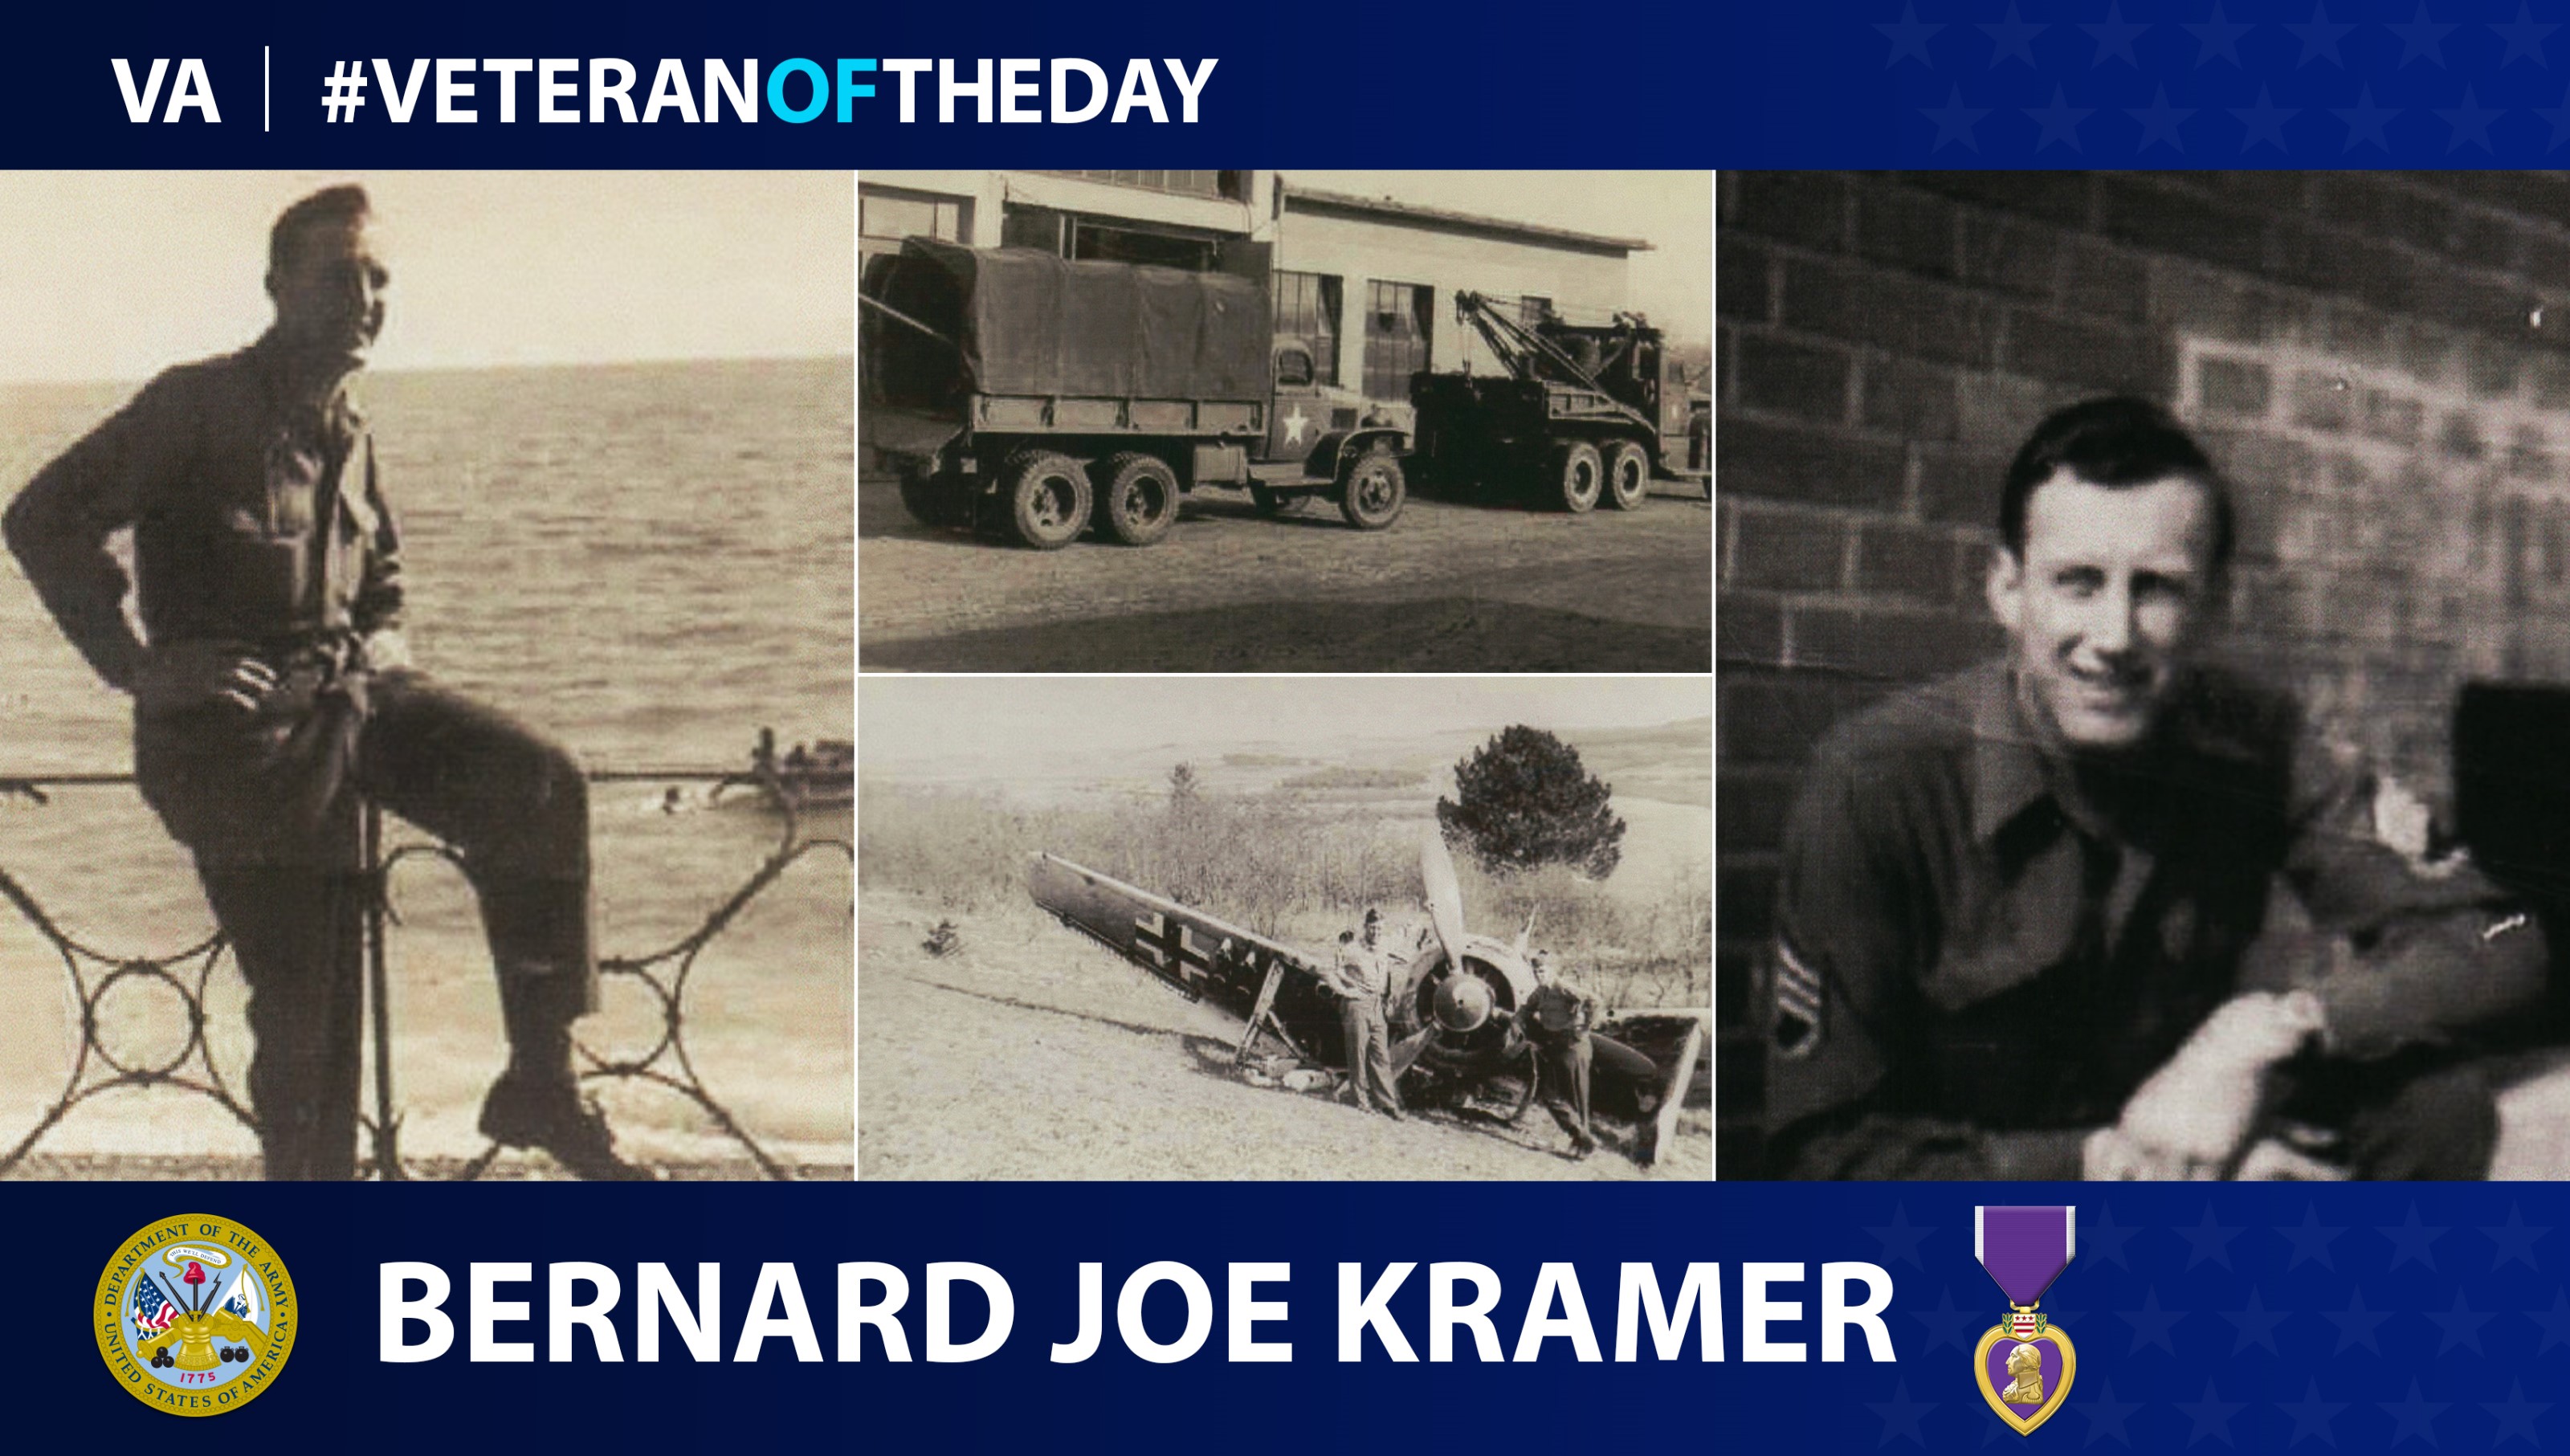 Bernard Joe Kramer is today's Veteran of the Day.